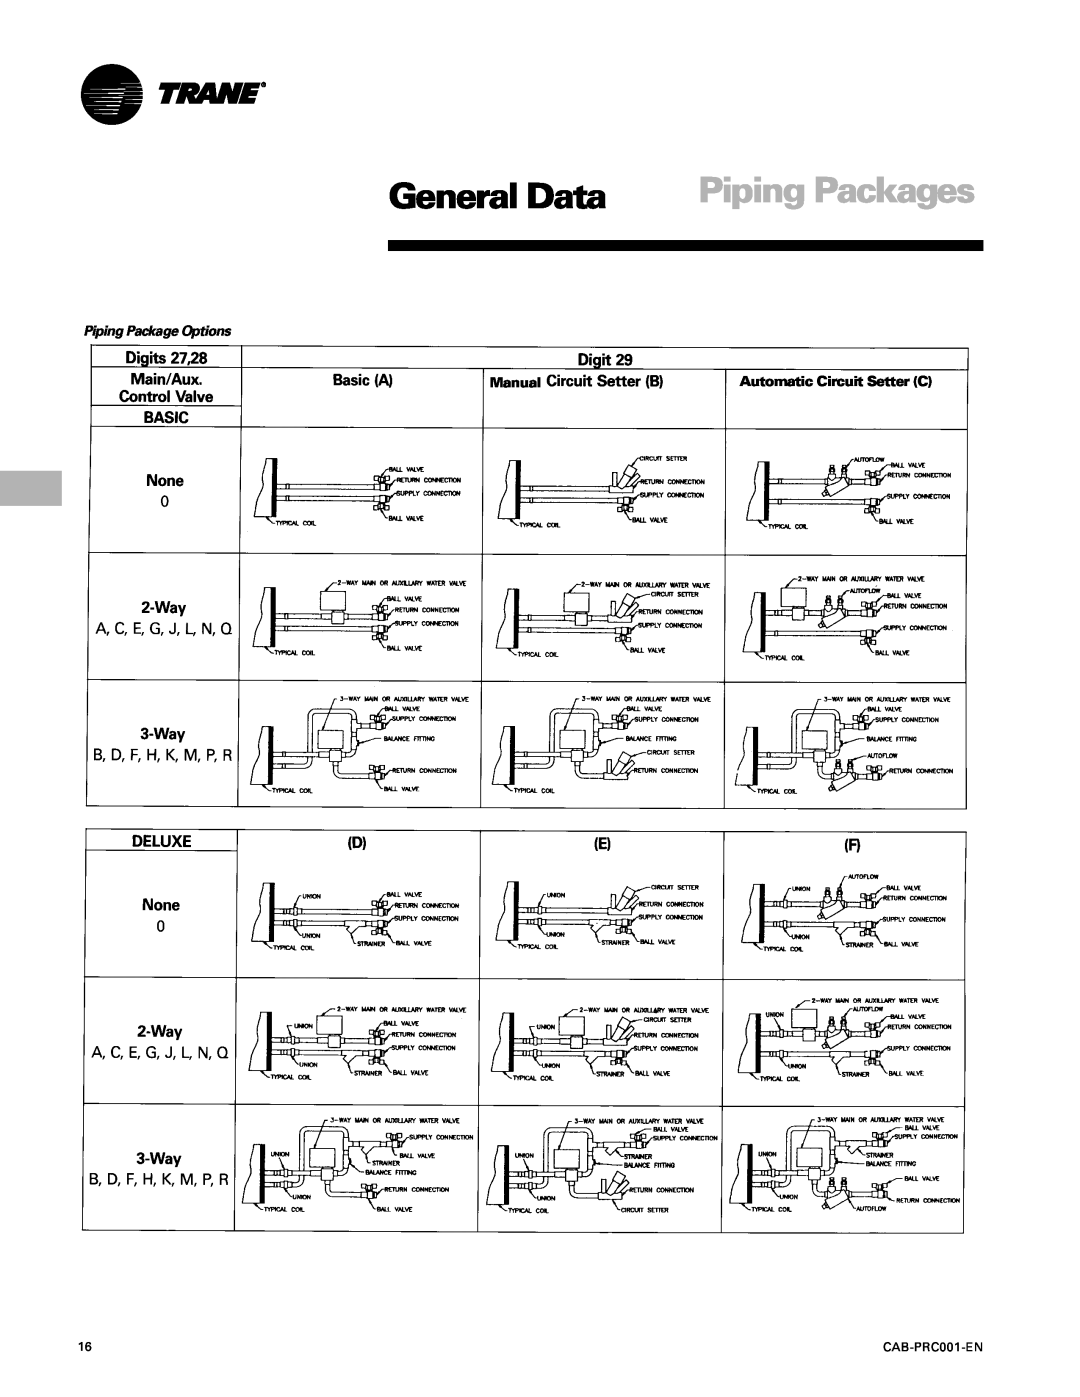 Trane CAB-PRC001-EN manual Piping Packages, General Data, Manual, Automatic Circuit Setter C 